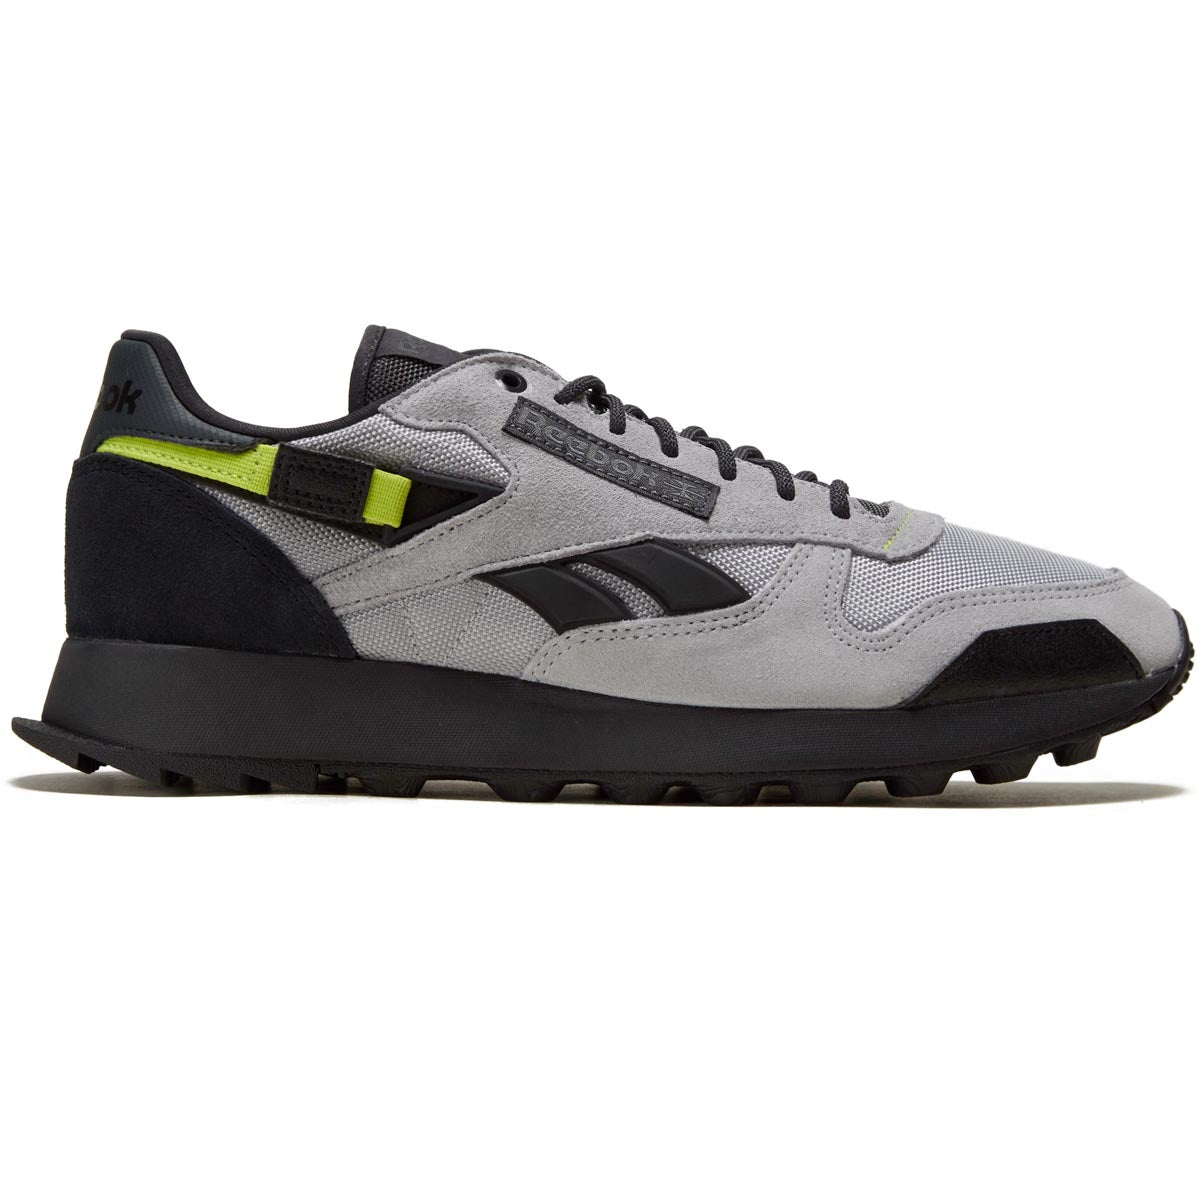 Reebok Classic Leather Winterized Shoes - Grey/Grey/Black image 1